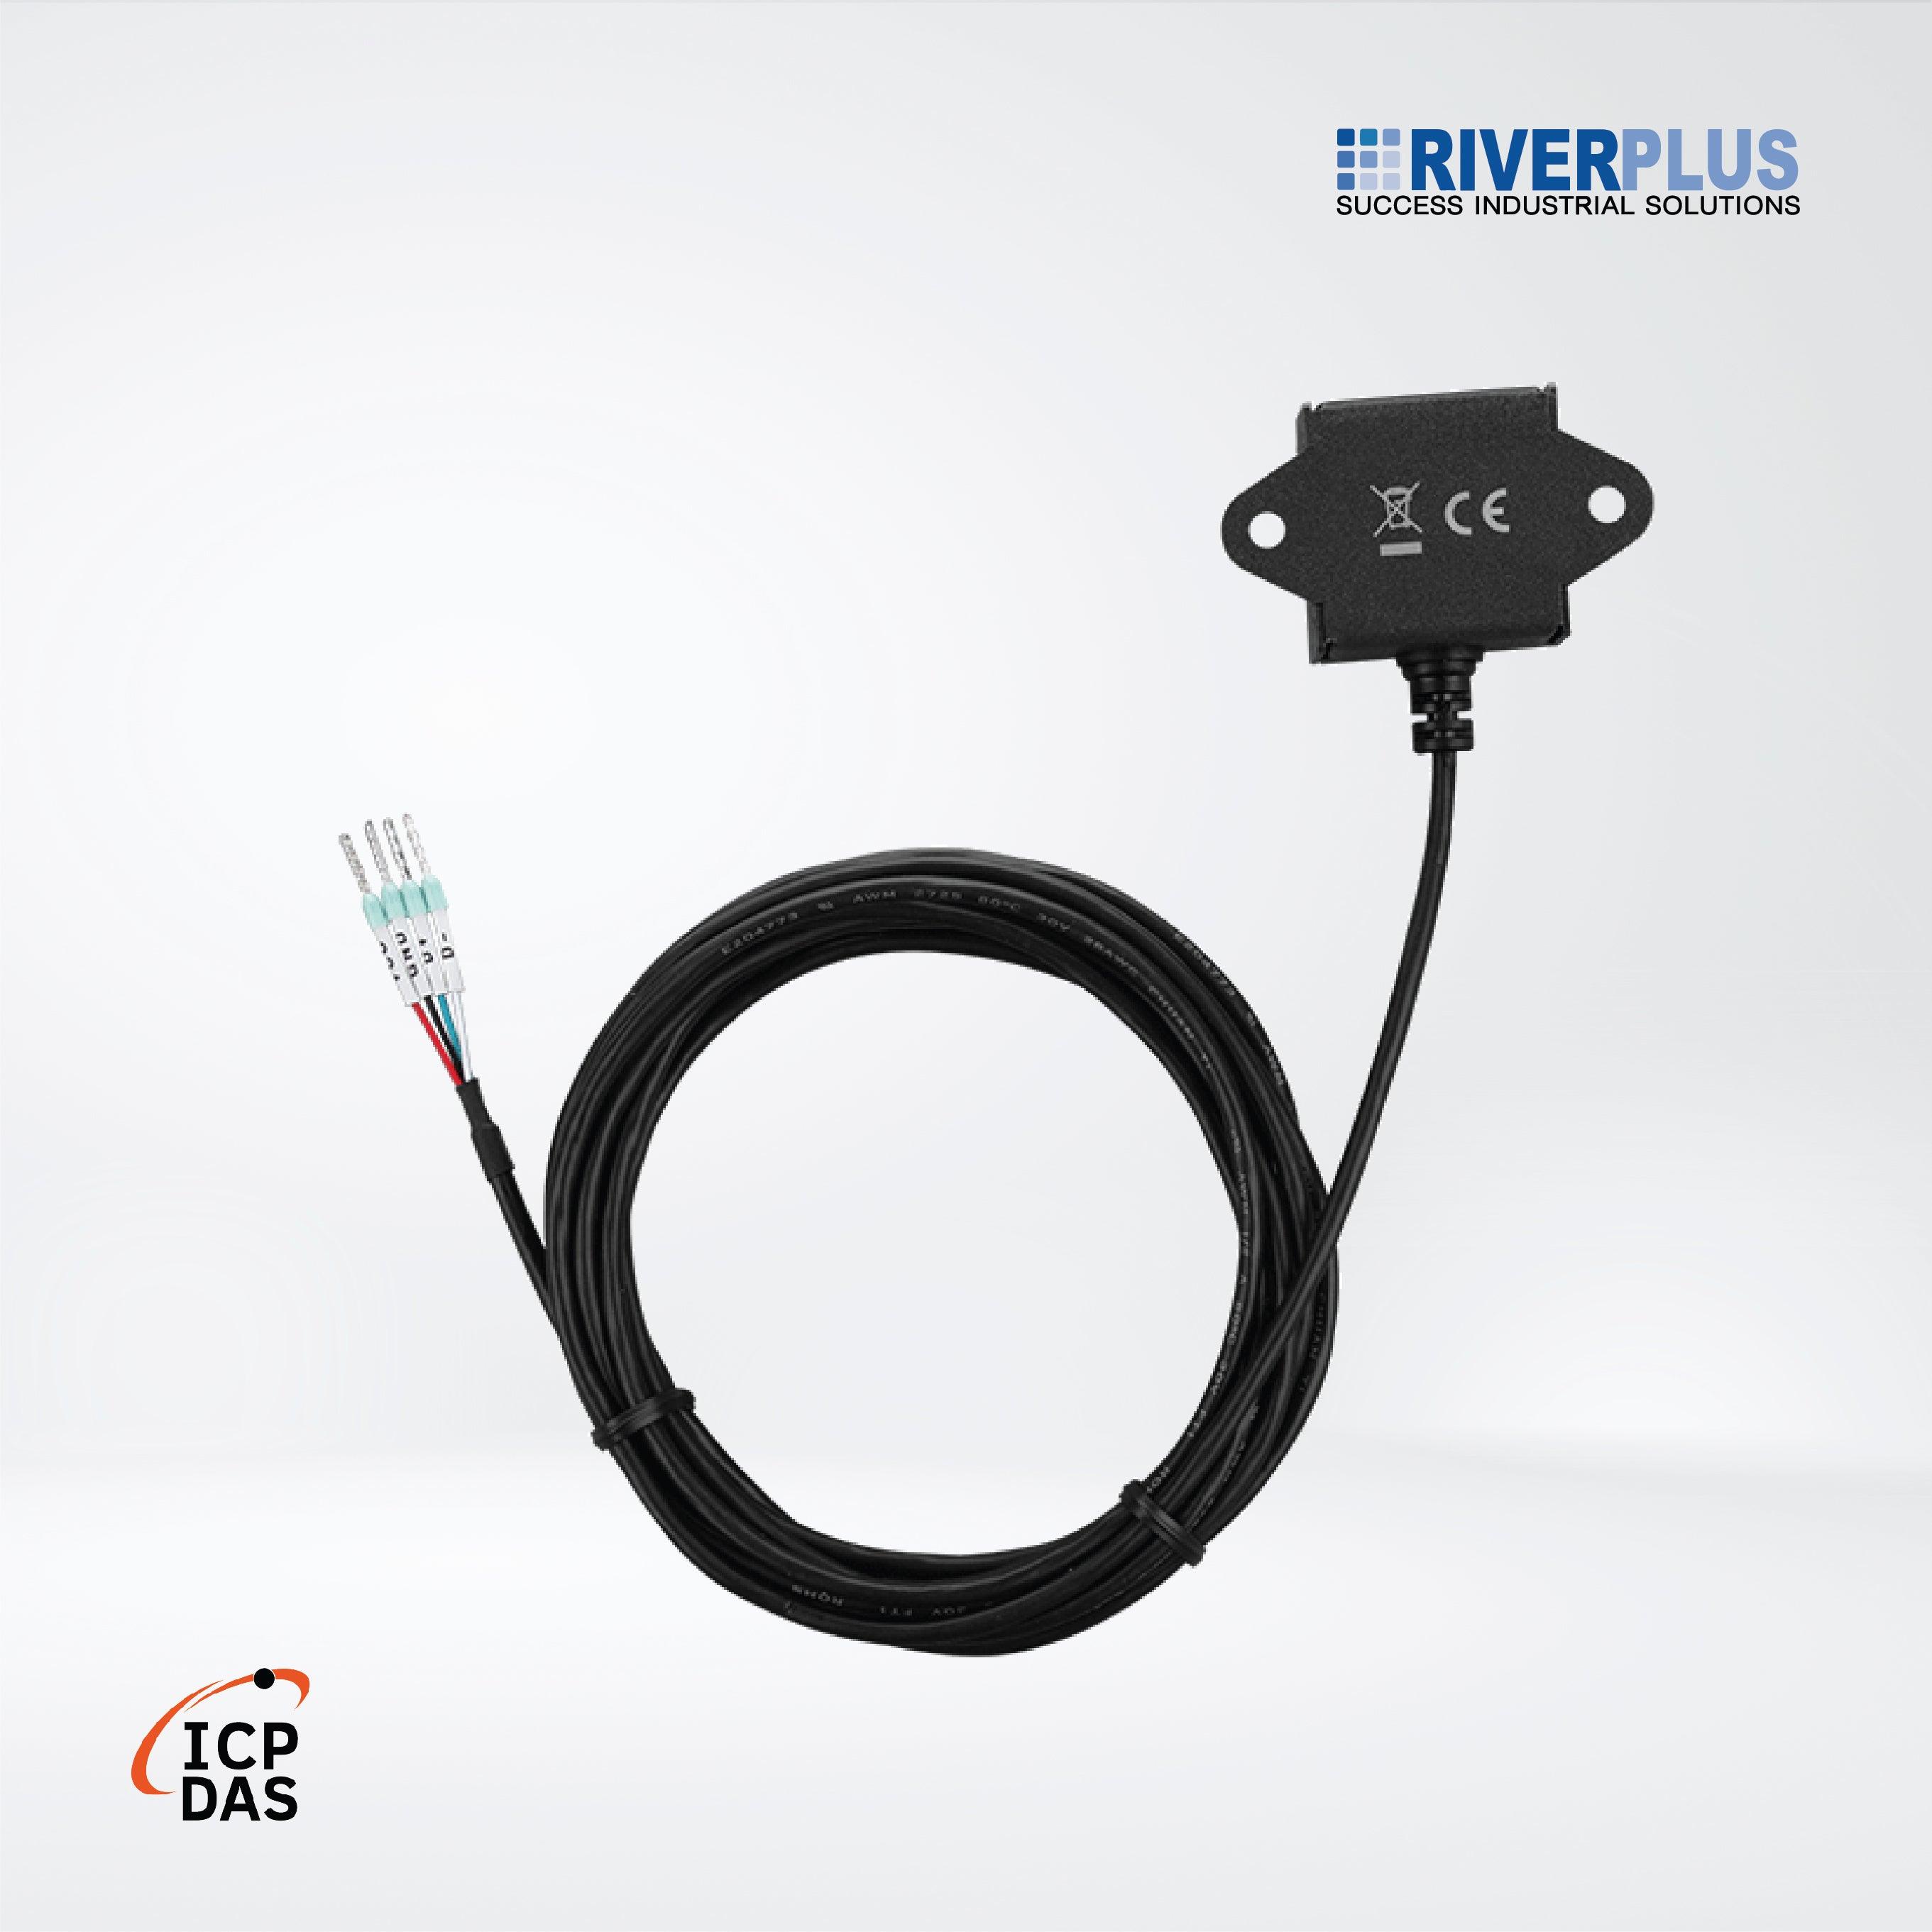 iSN-711-MRTU Single axis vibration sensor module (RS-485) - Riverplus